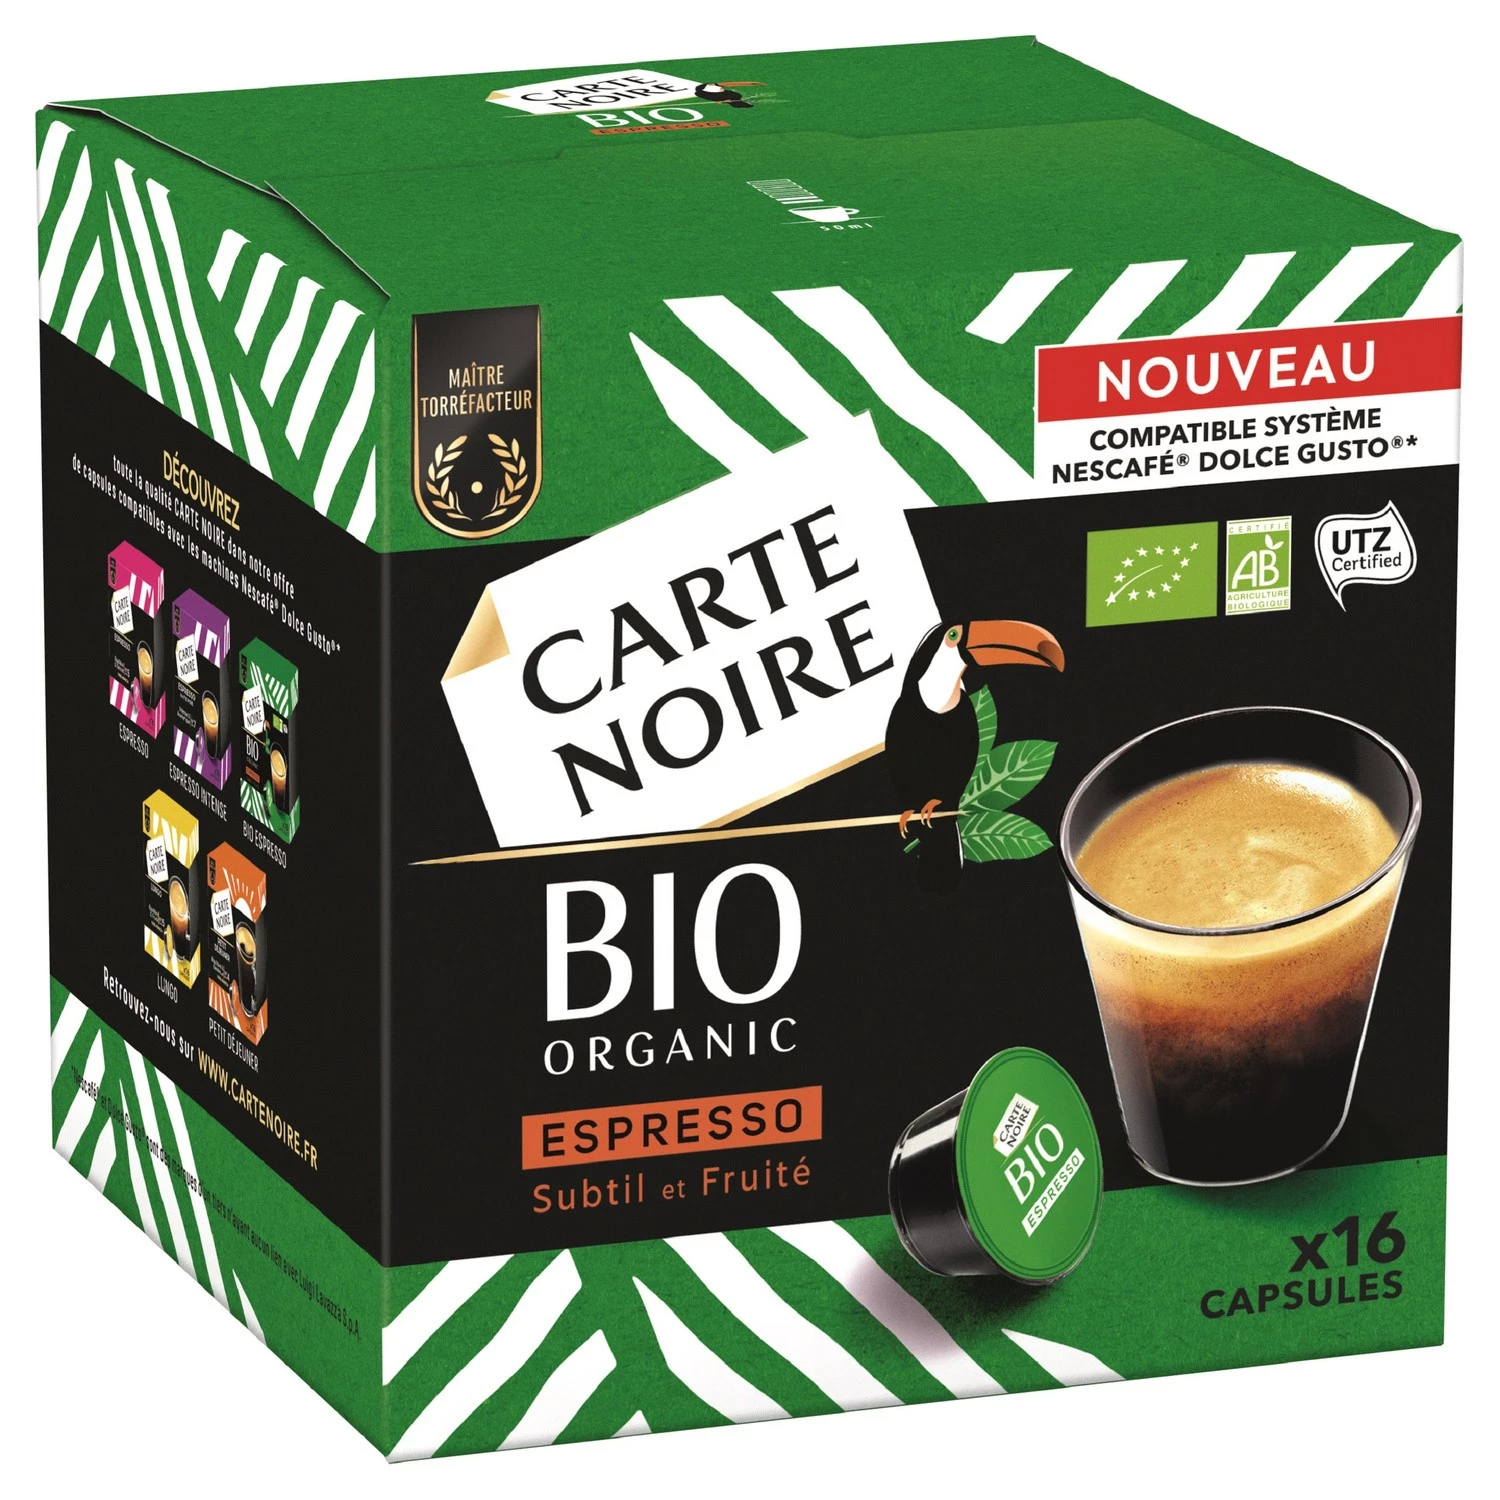 Organic subtle & fruity espresso coffee x16 capsules 128g - CARTE NOIRE